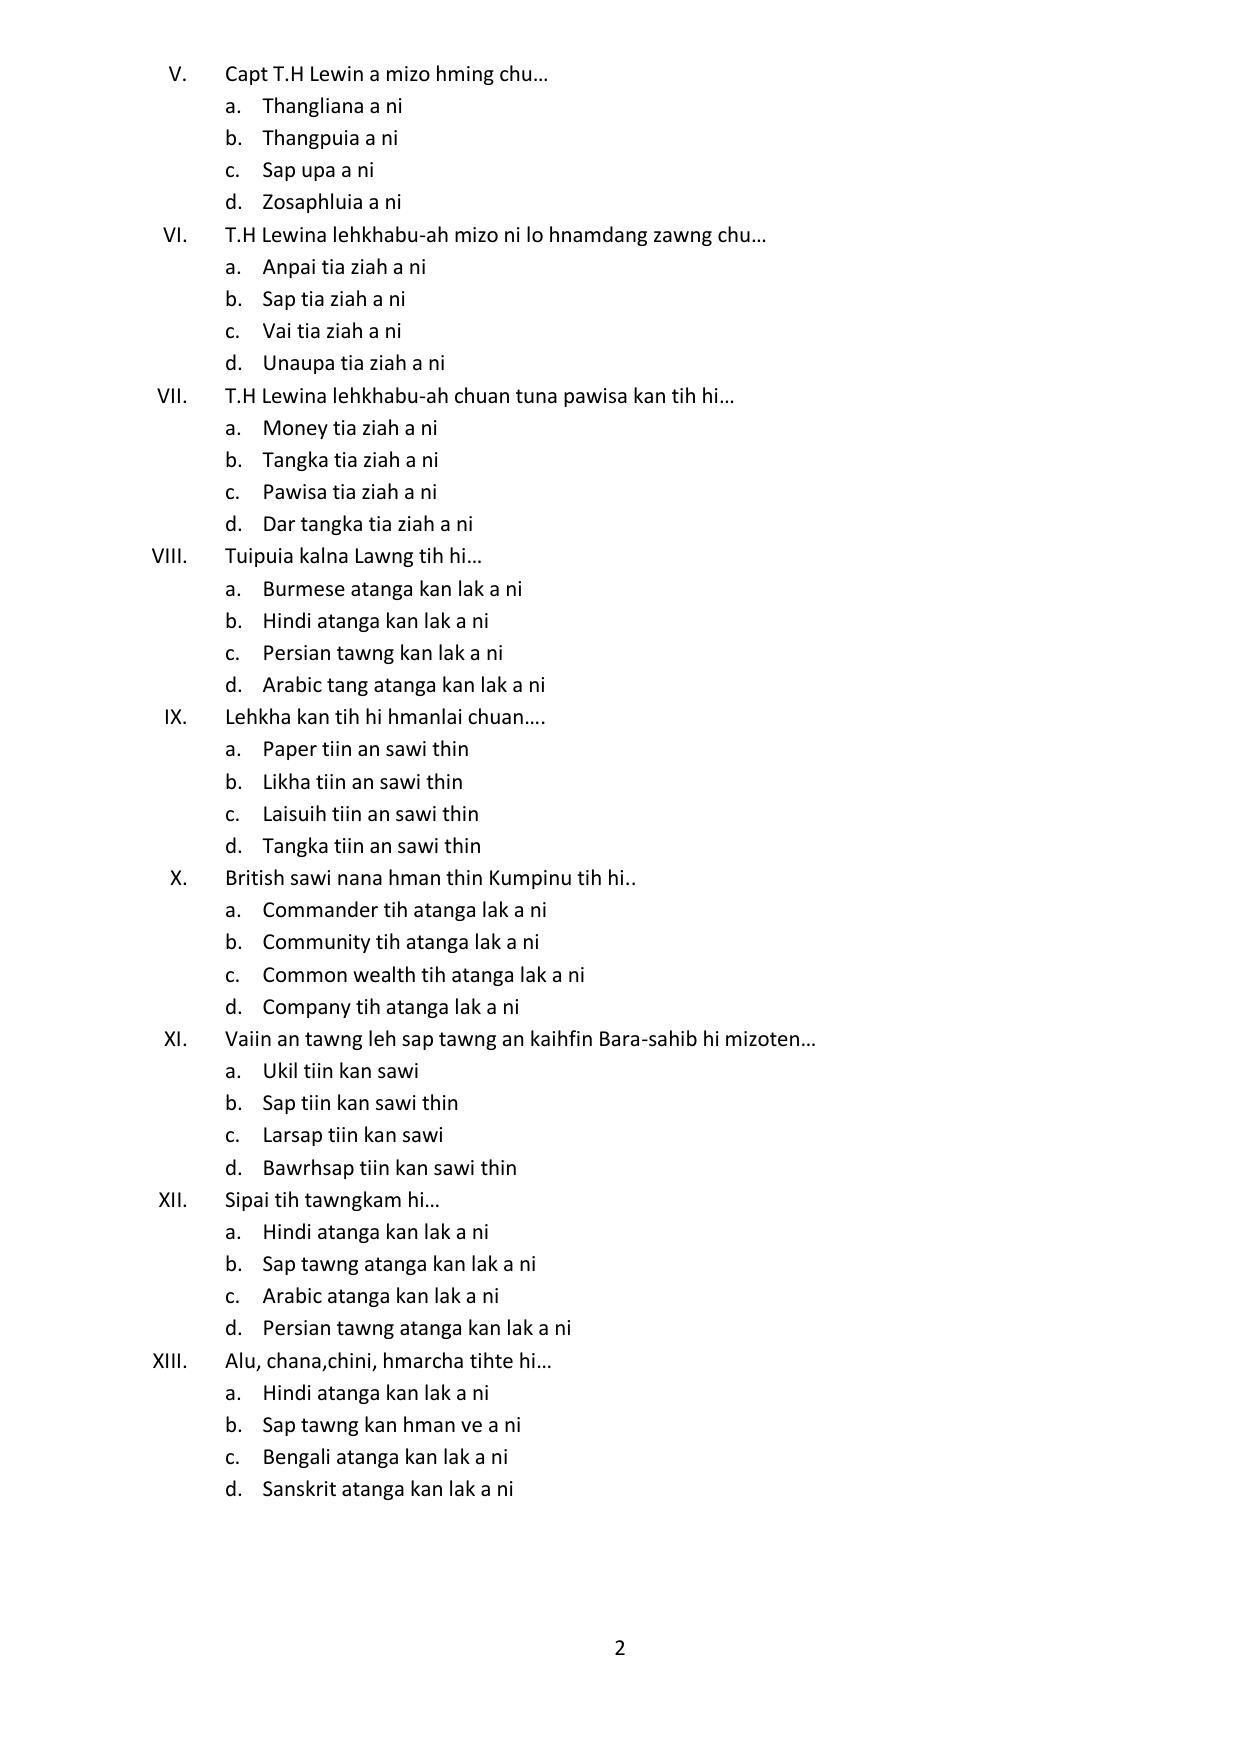 CBSE Class 12 Mizo Sample Paper 2023 - Page 2